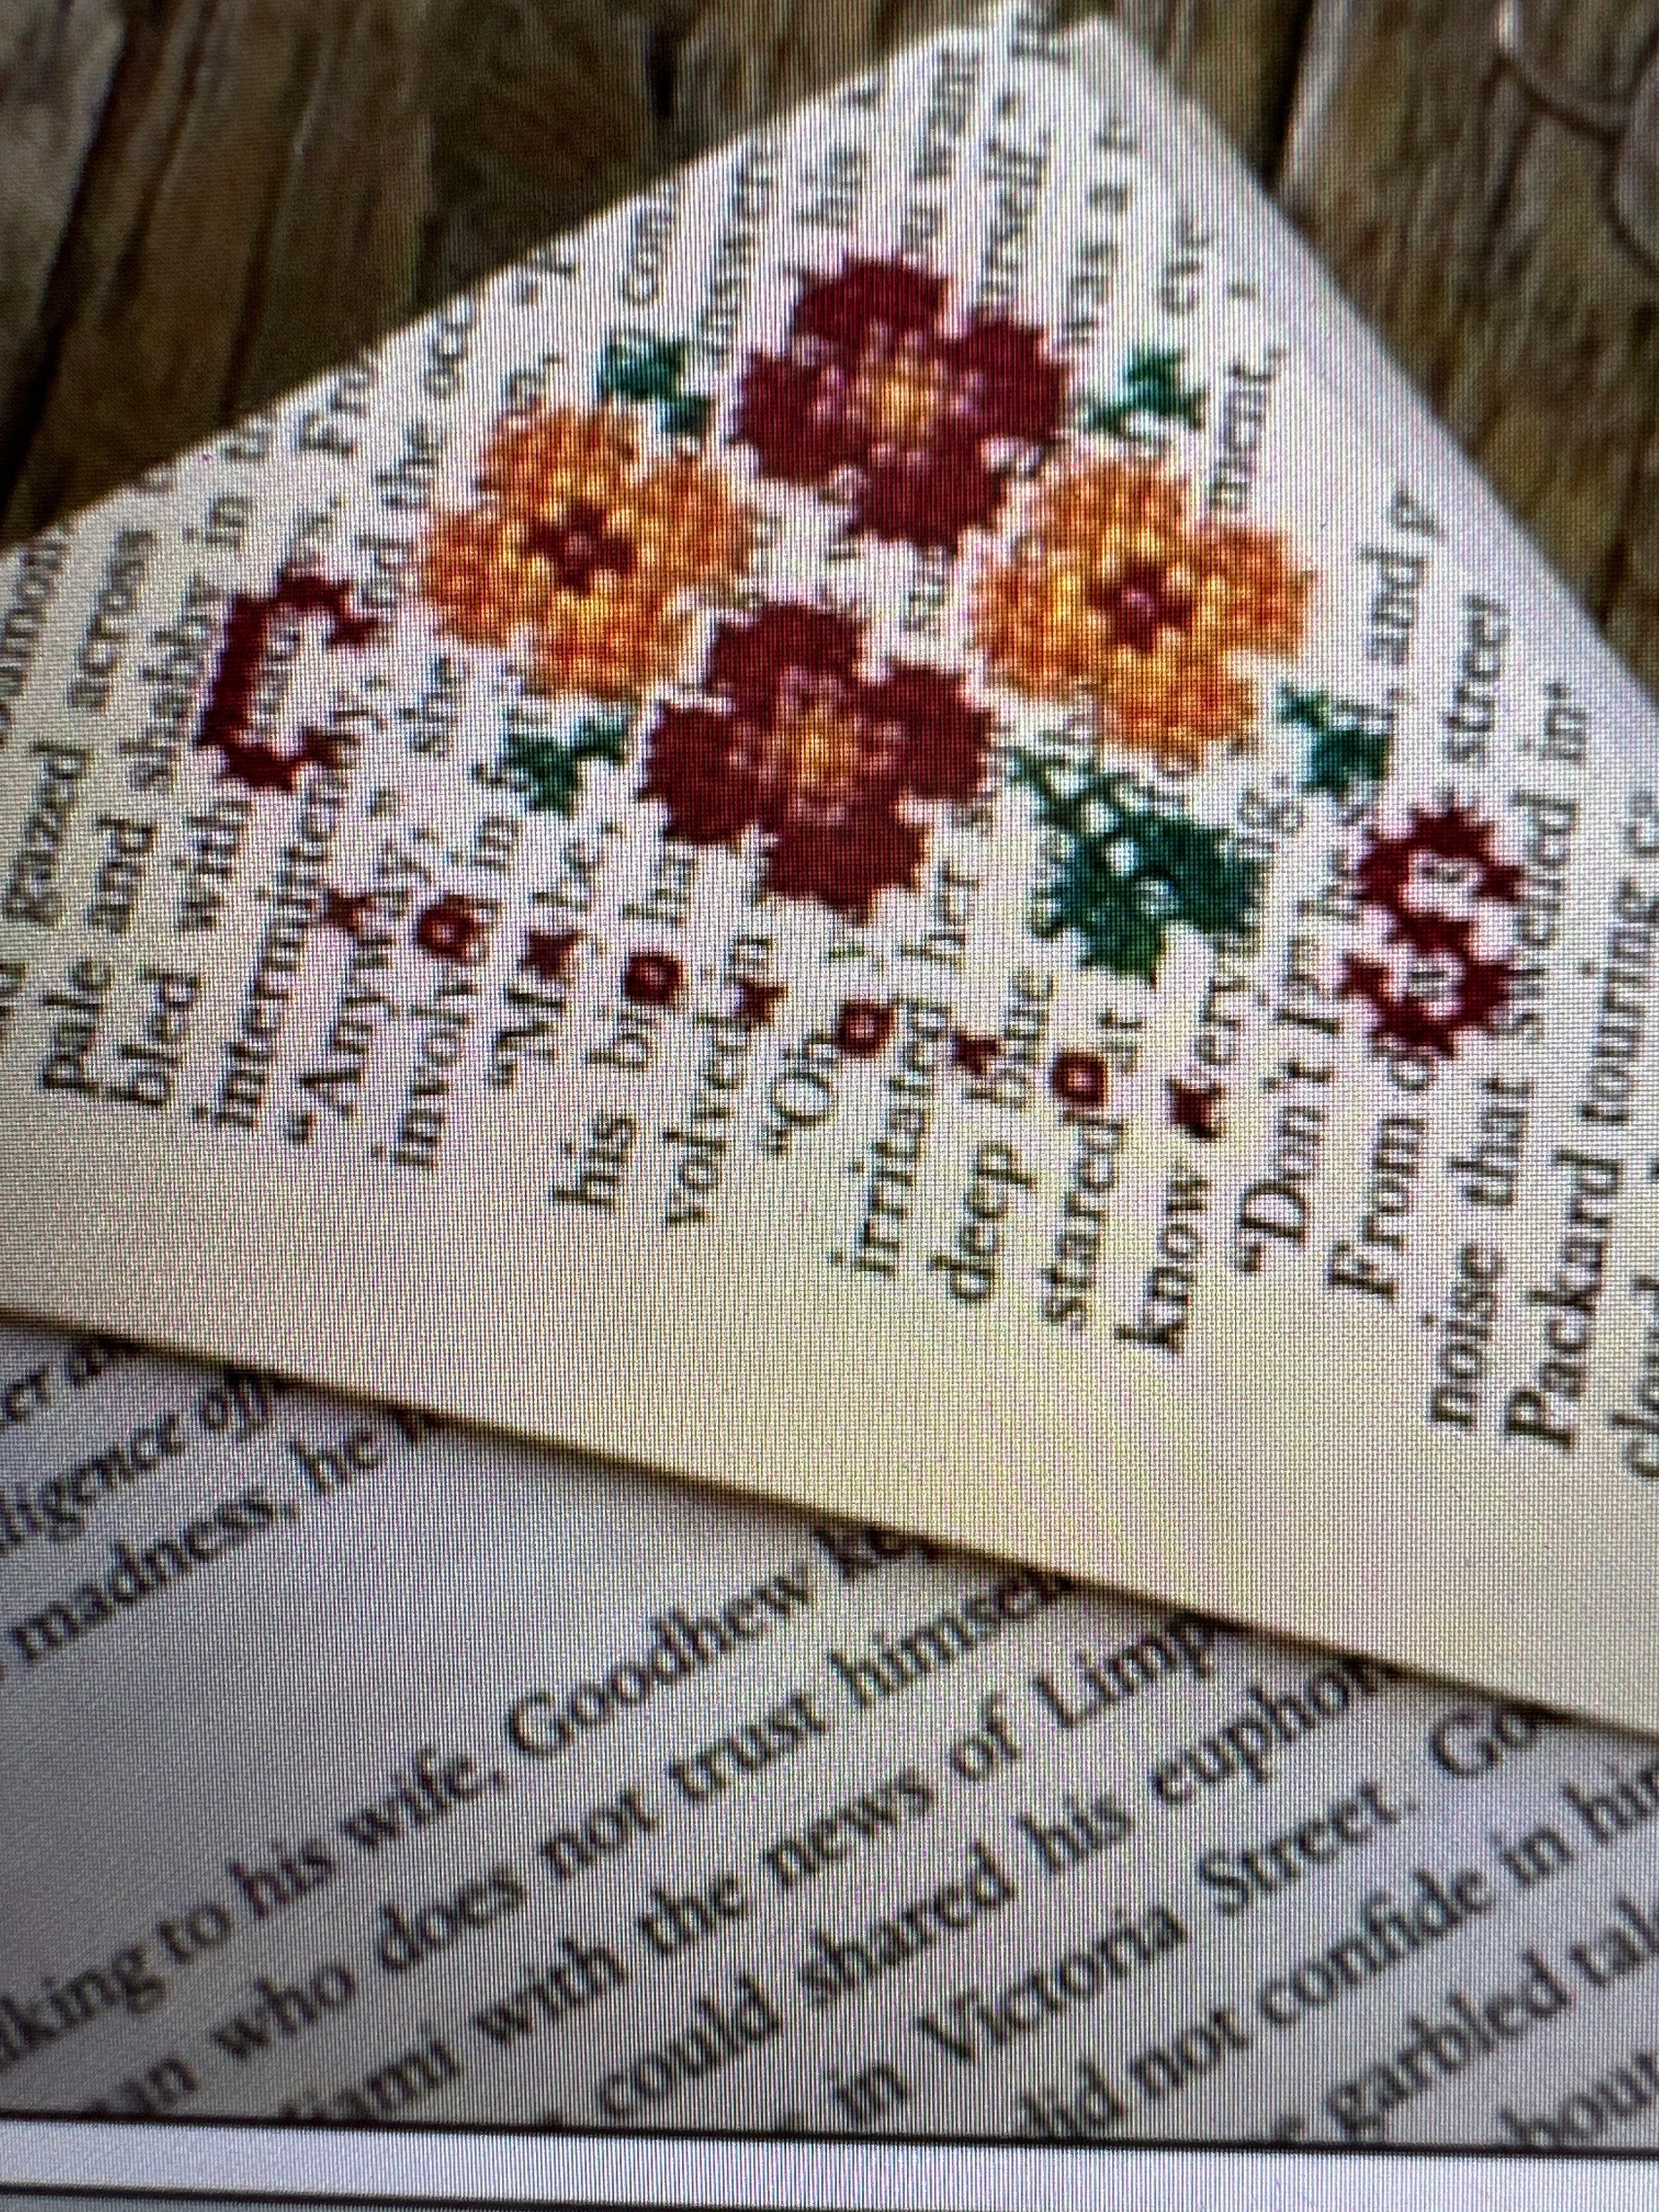 Bookmark Kit Haystack Stitching